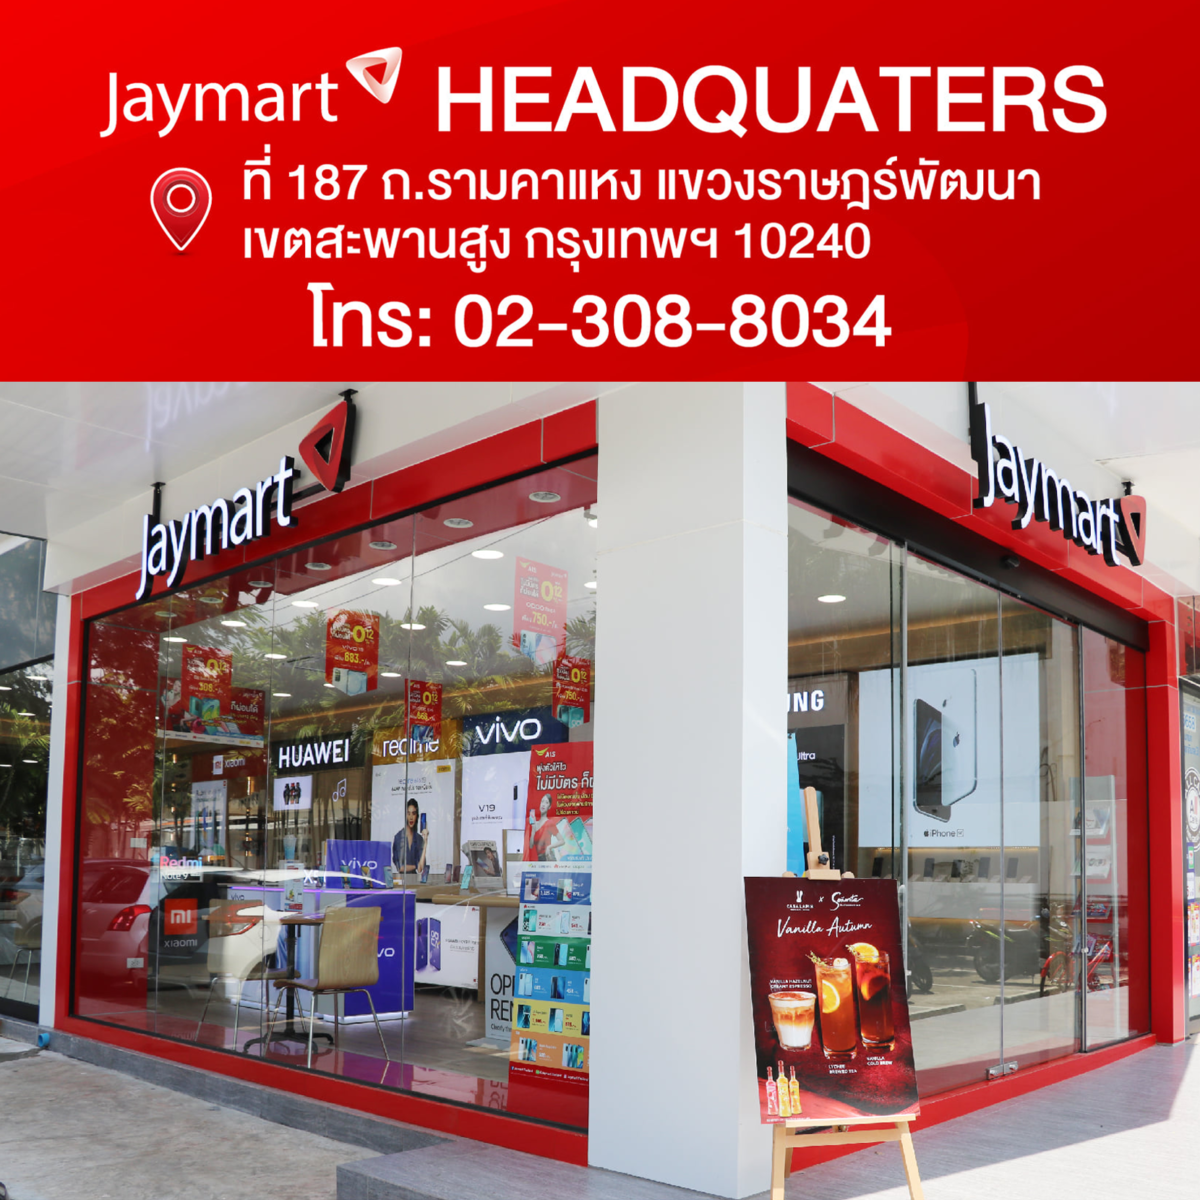 Jaymart Headquarters